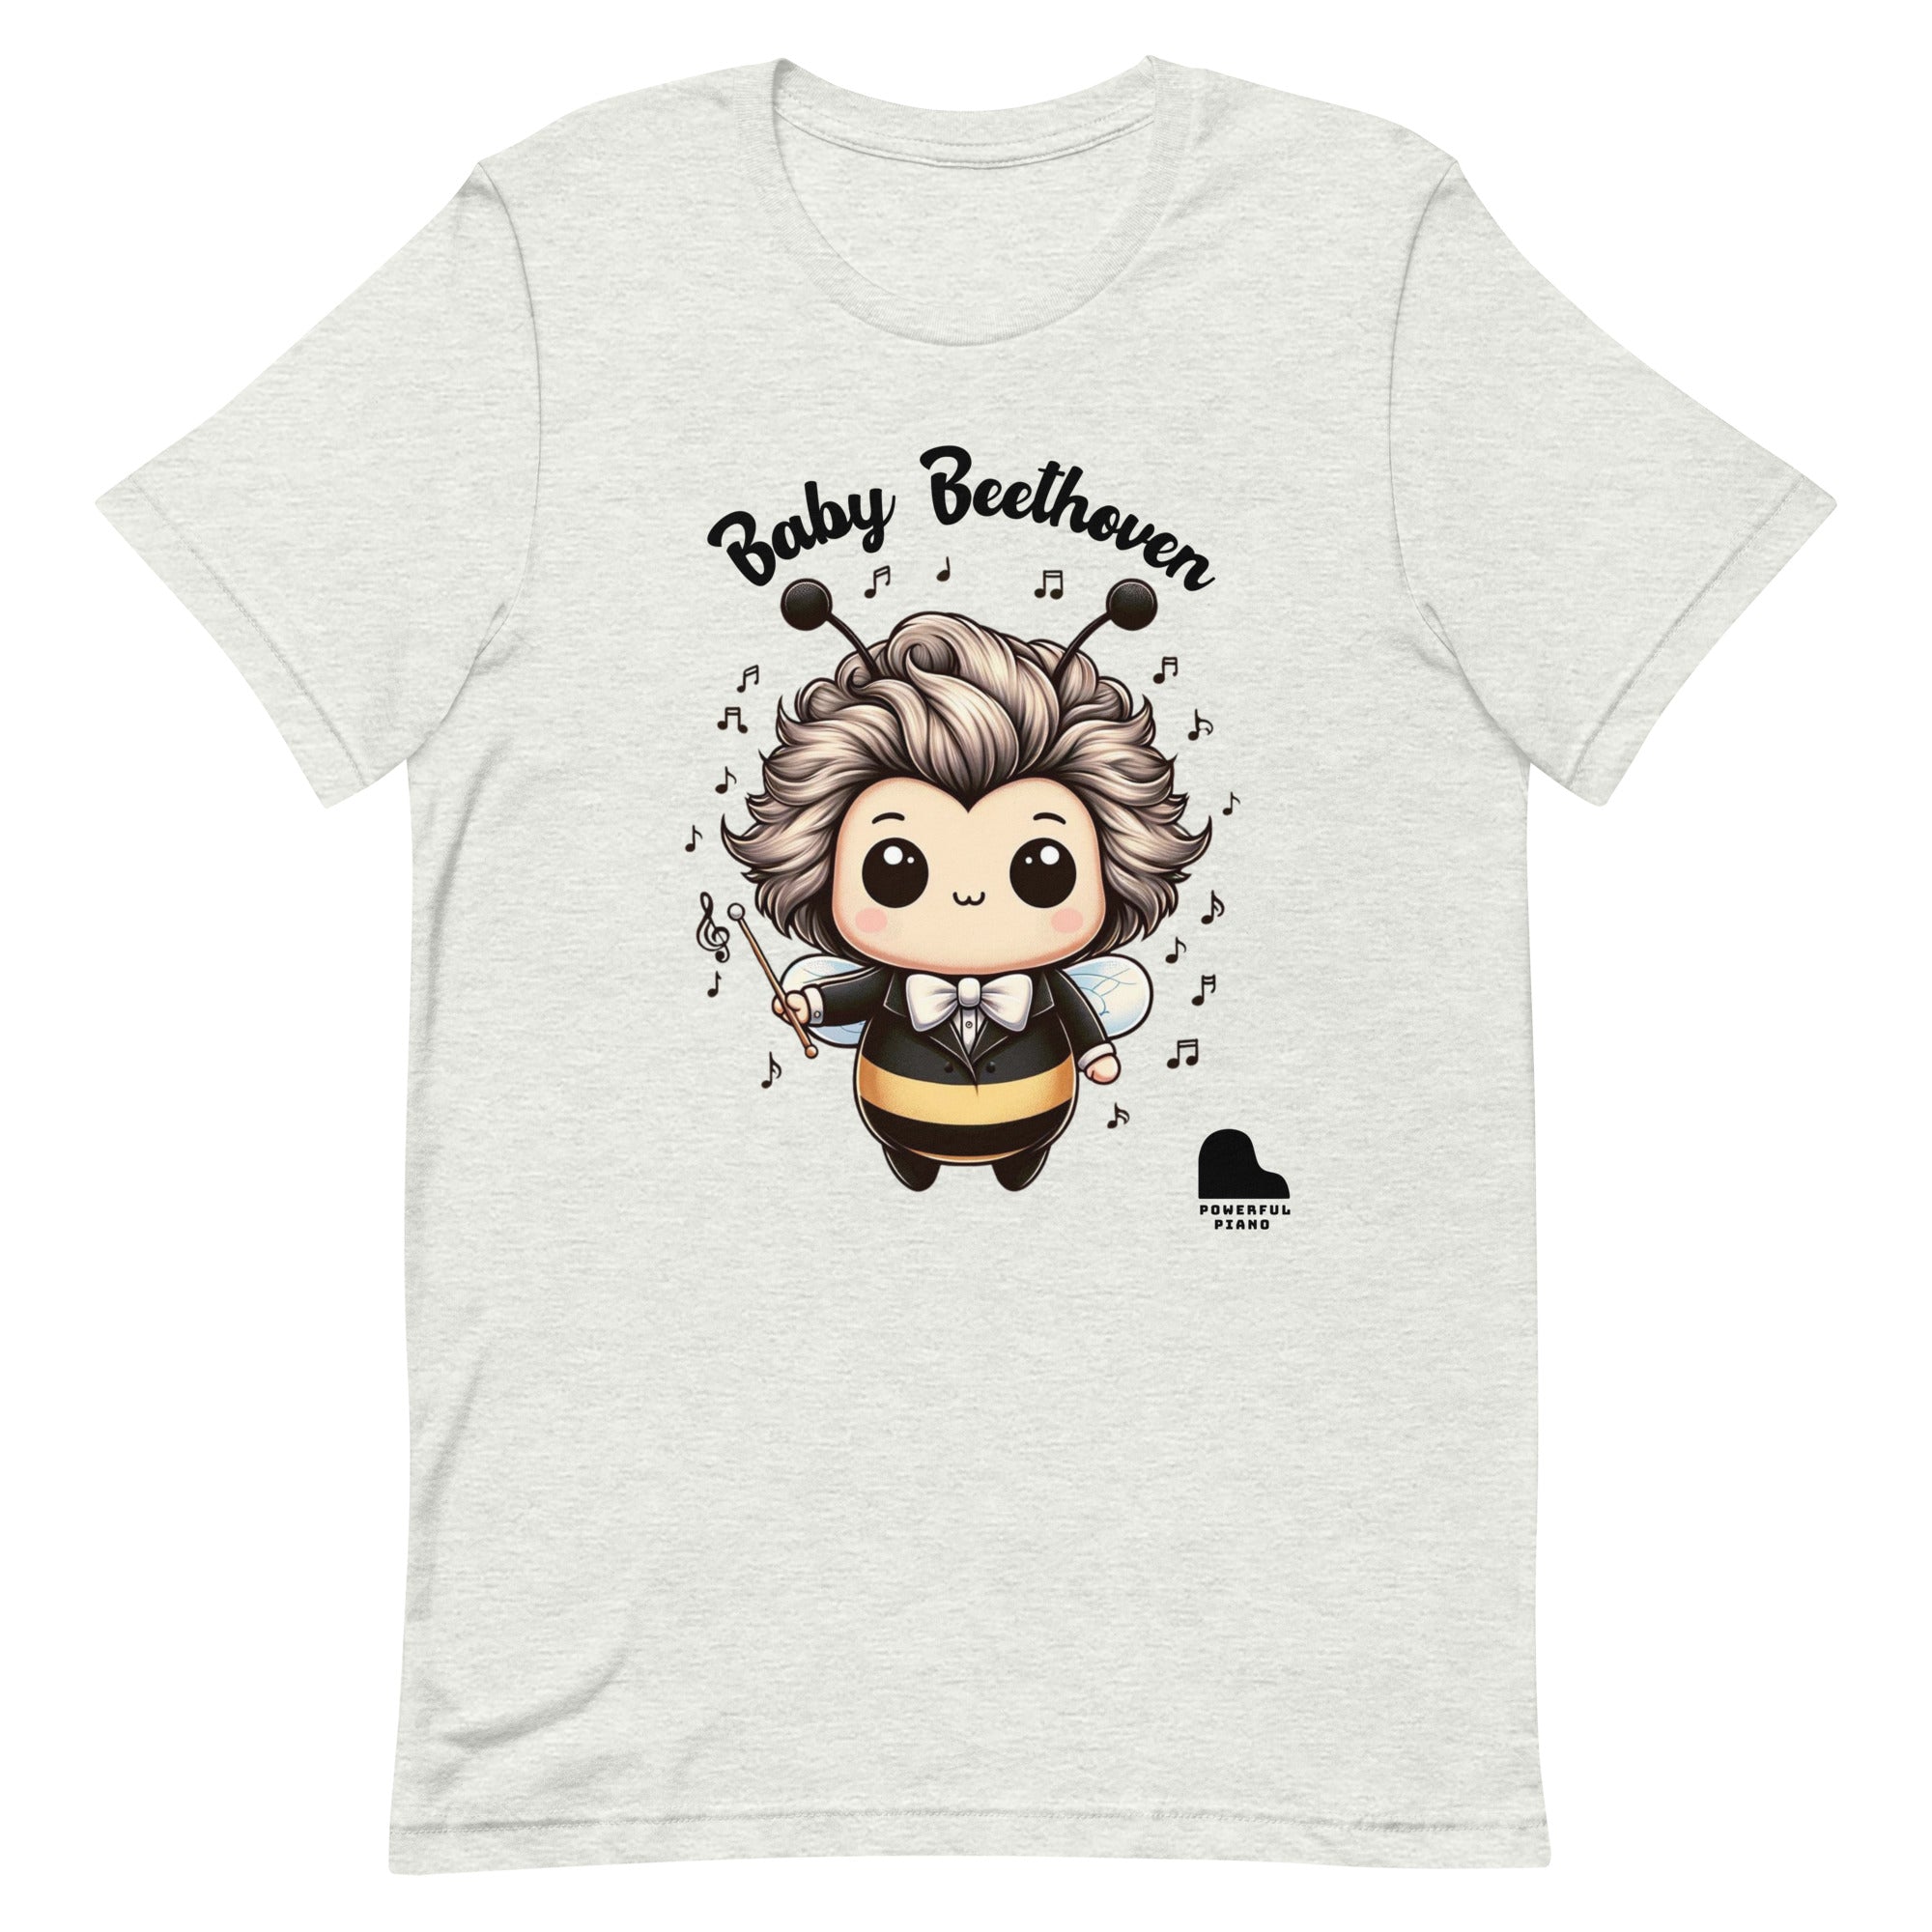 Baby Beethoven T-Shirt